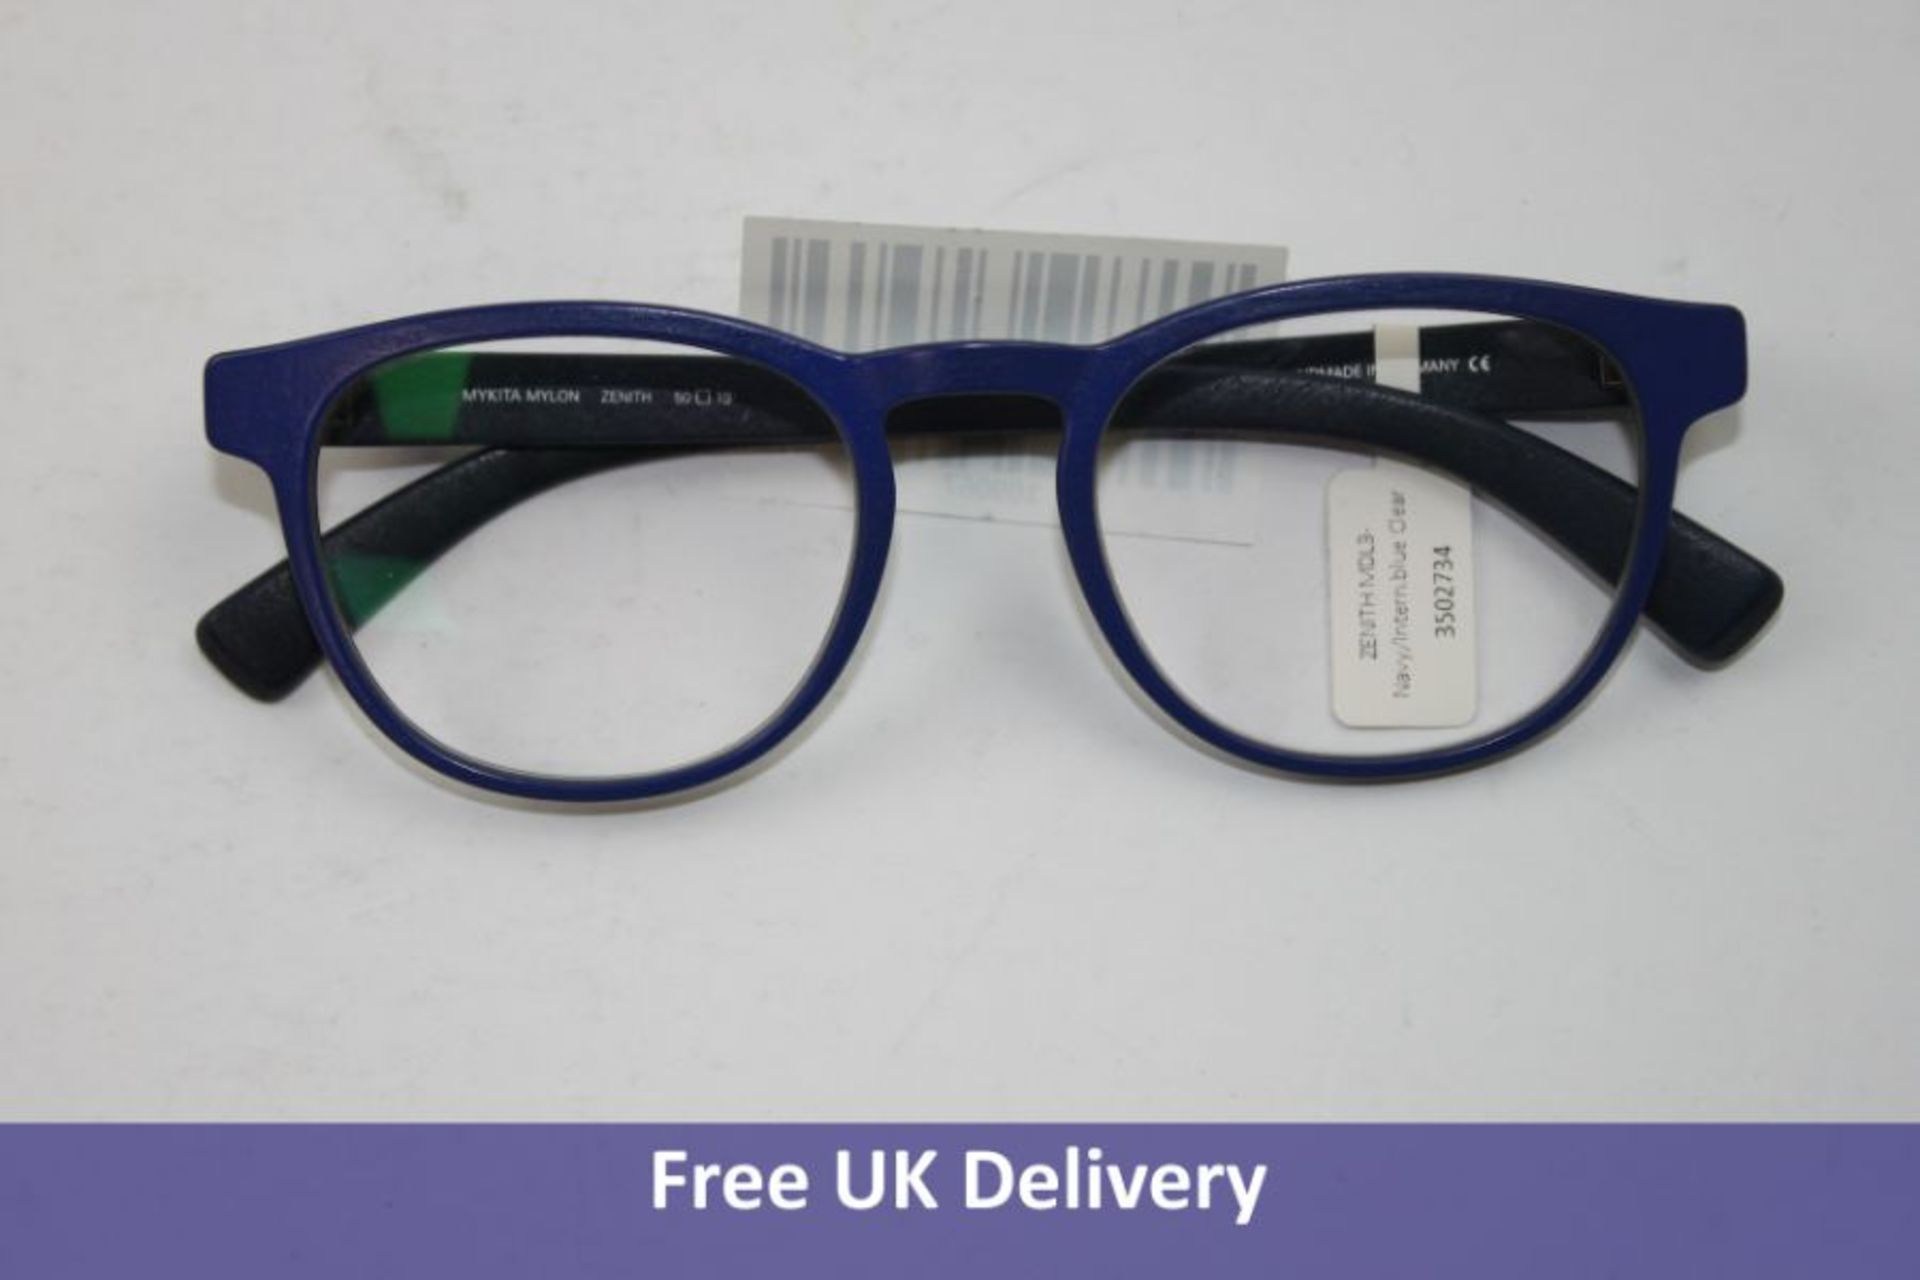 Mykita Zenith Unisex Glasses, Blue, Size 145